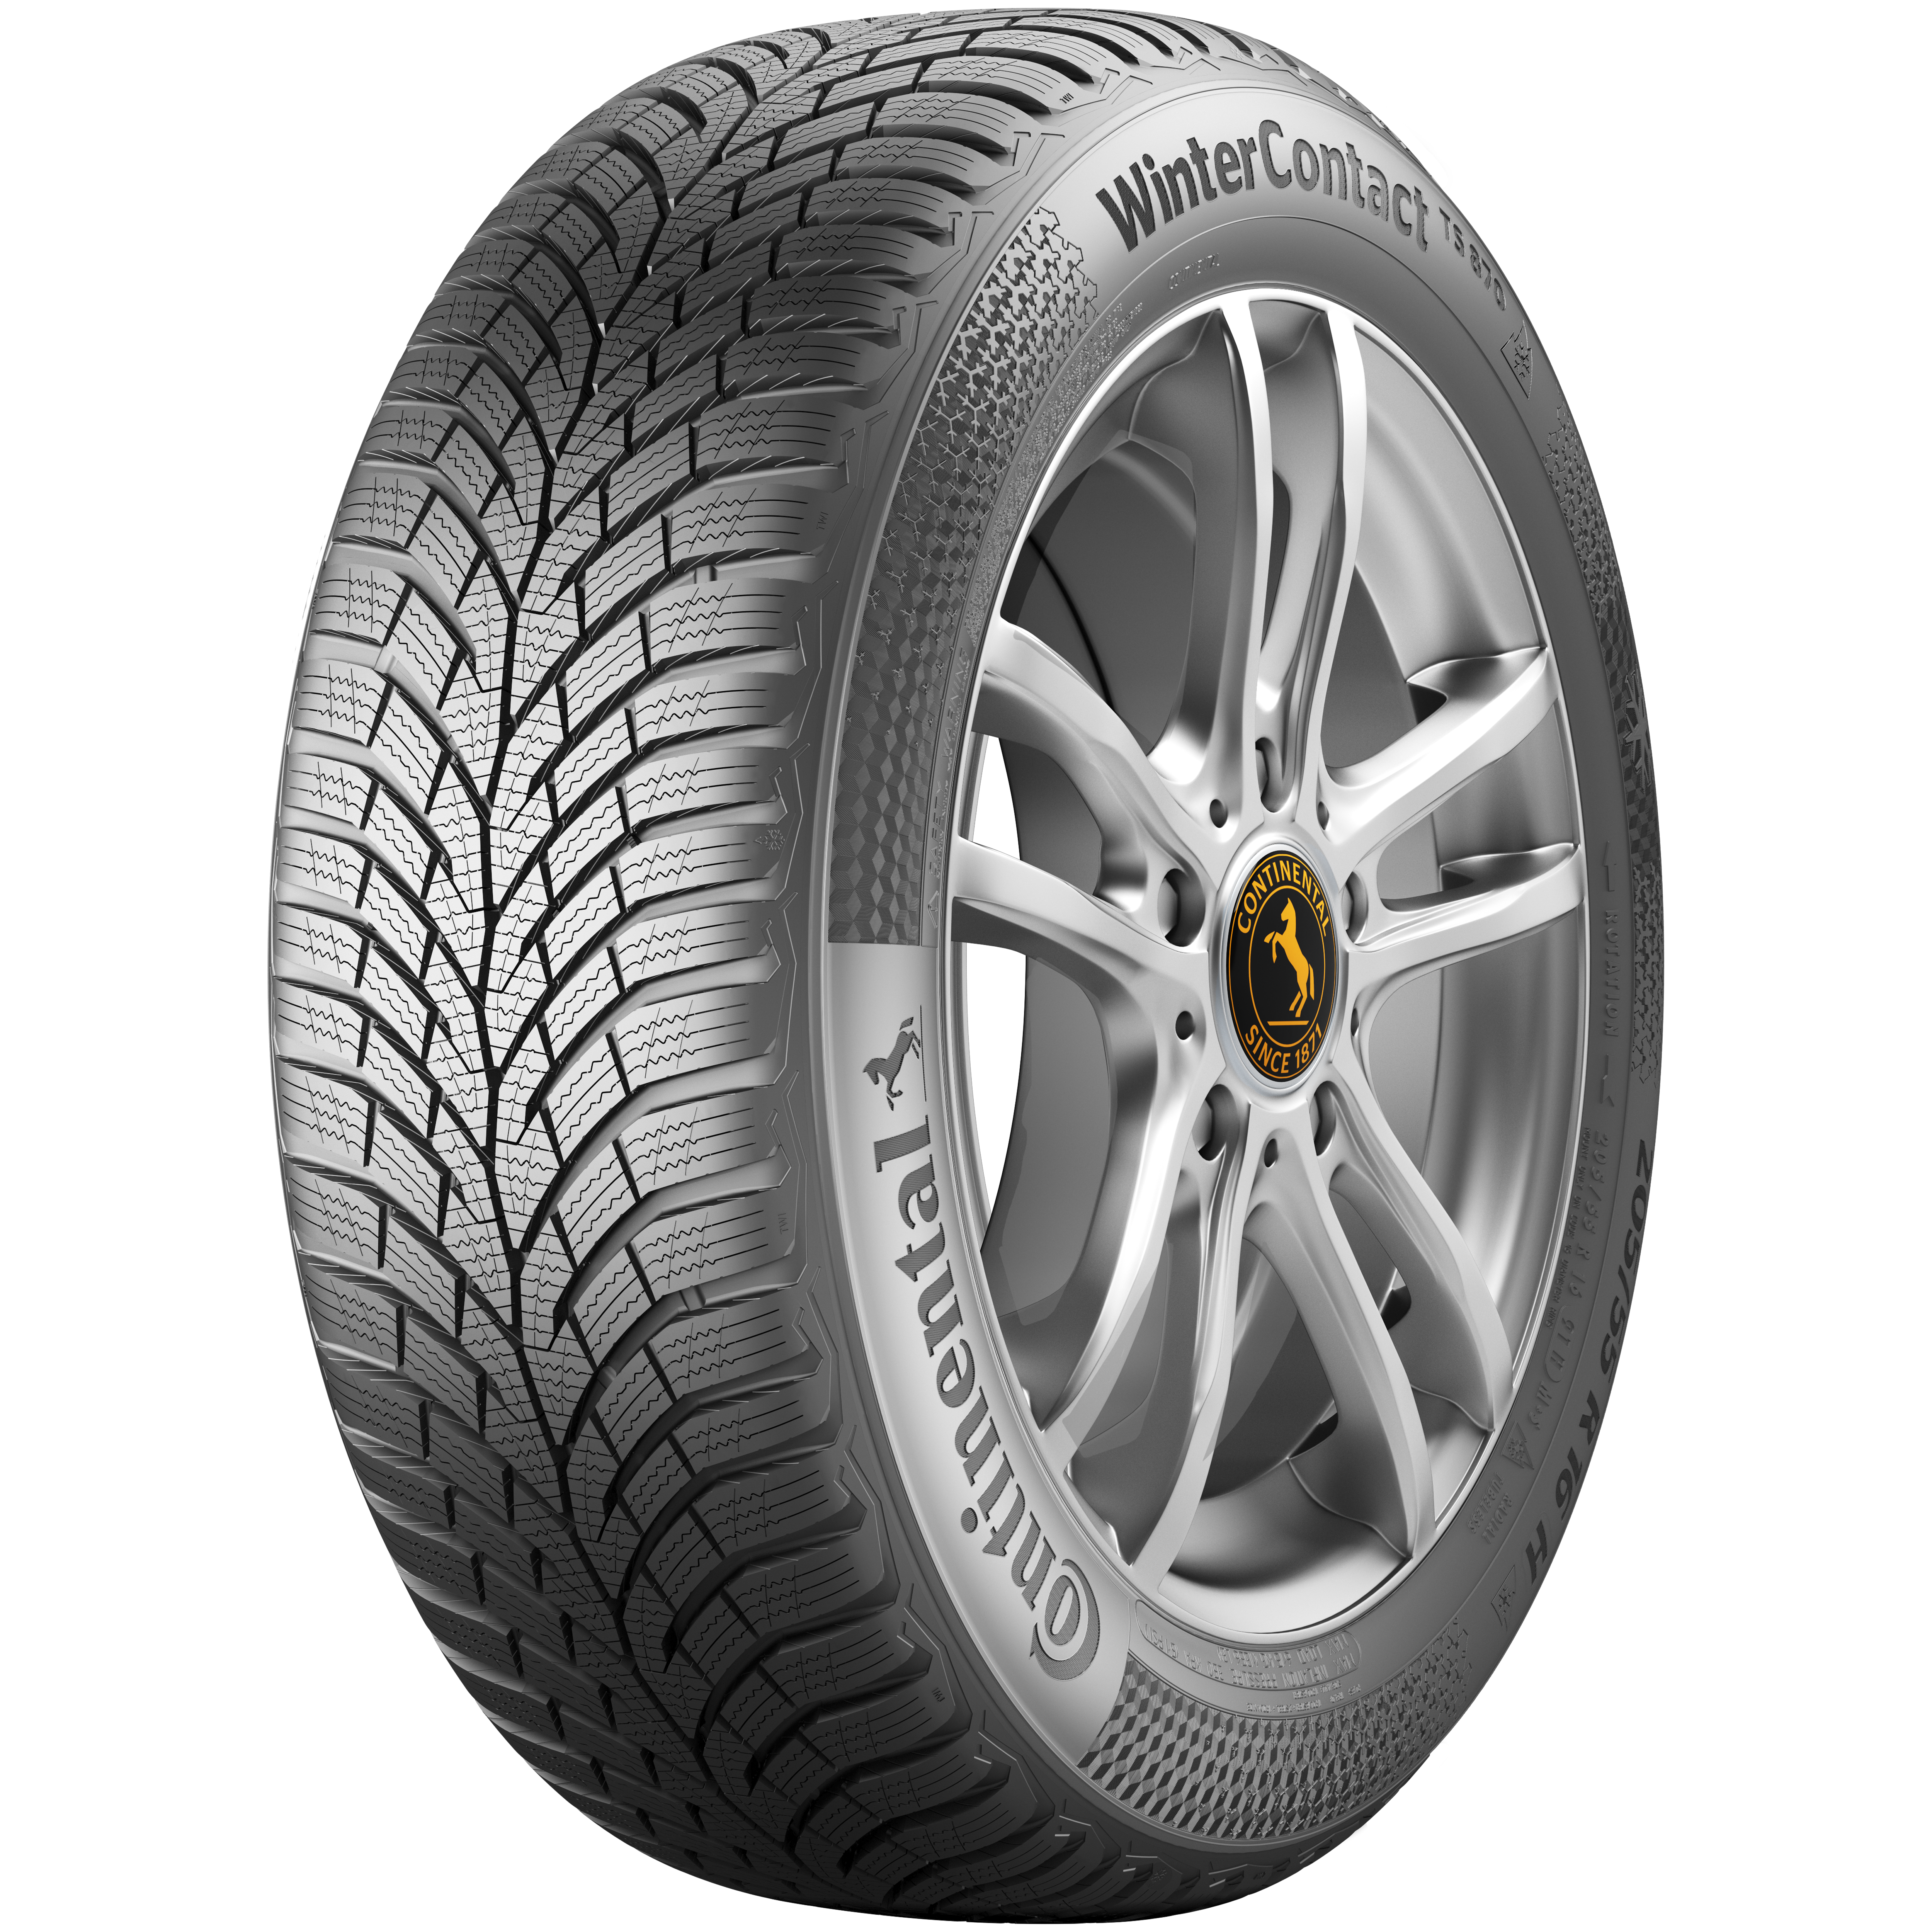 WinterContact™ 870 | Continental tires